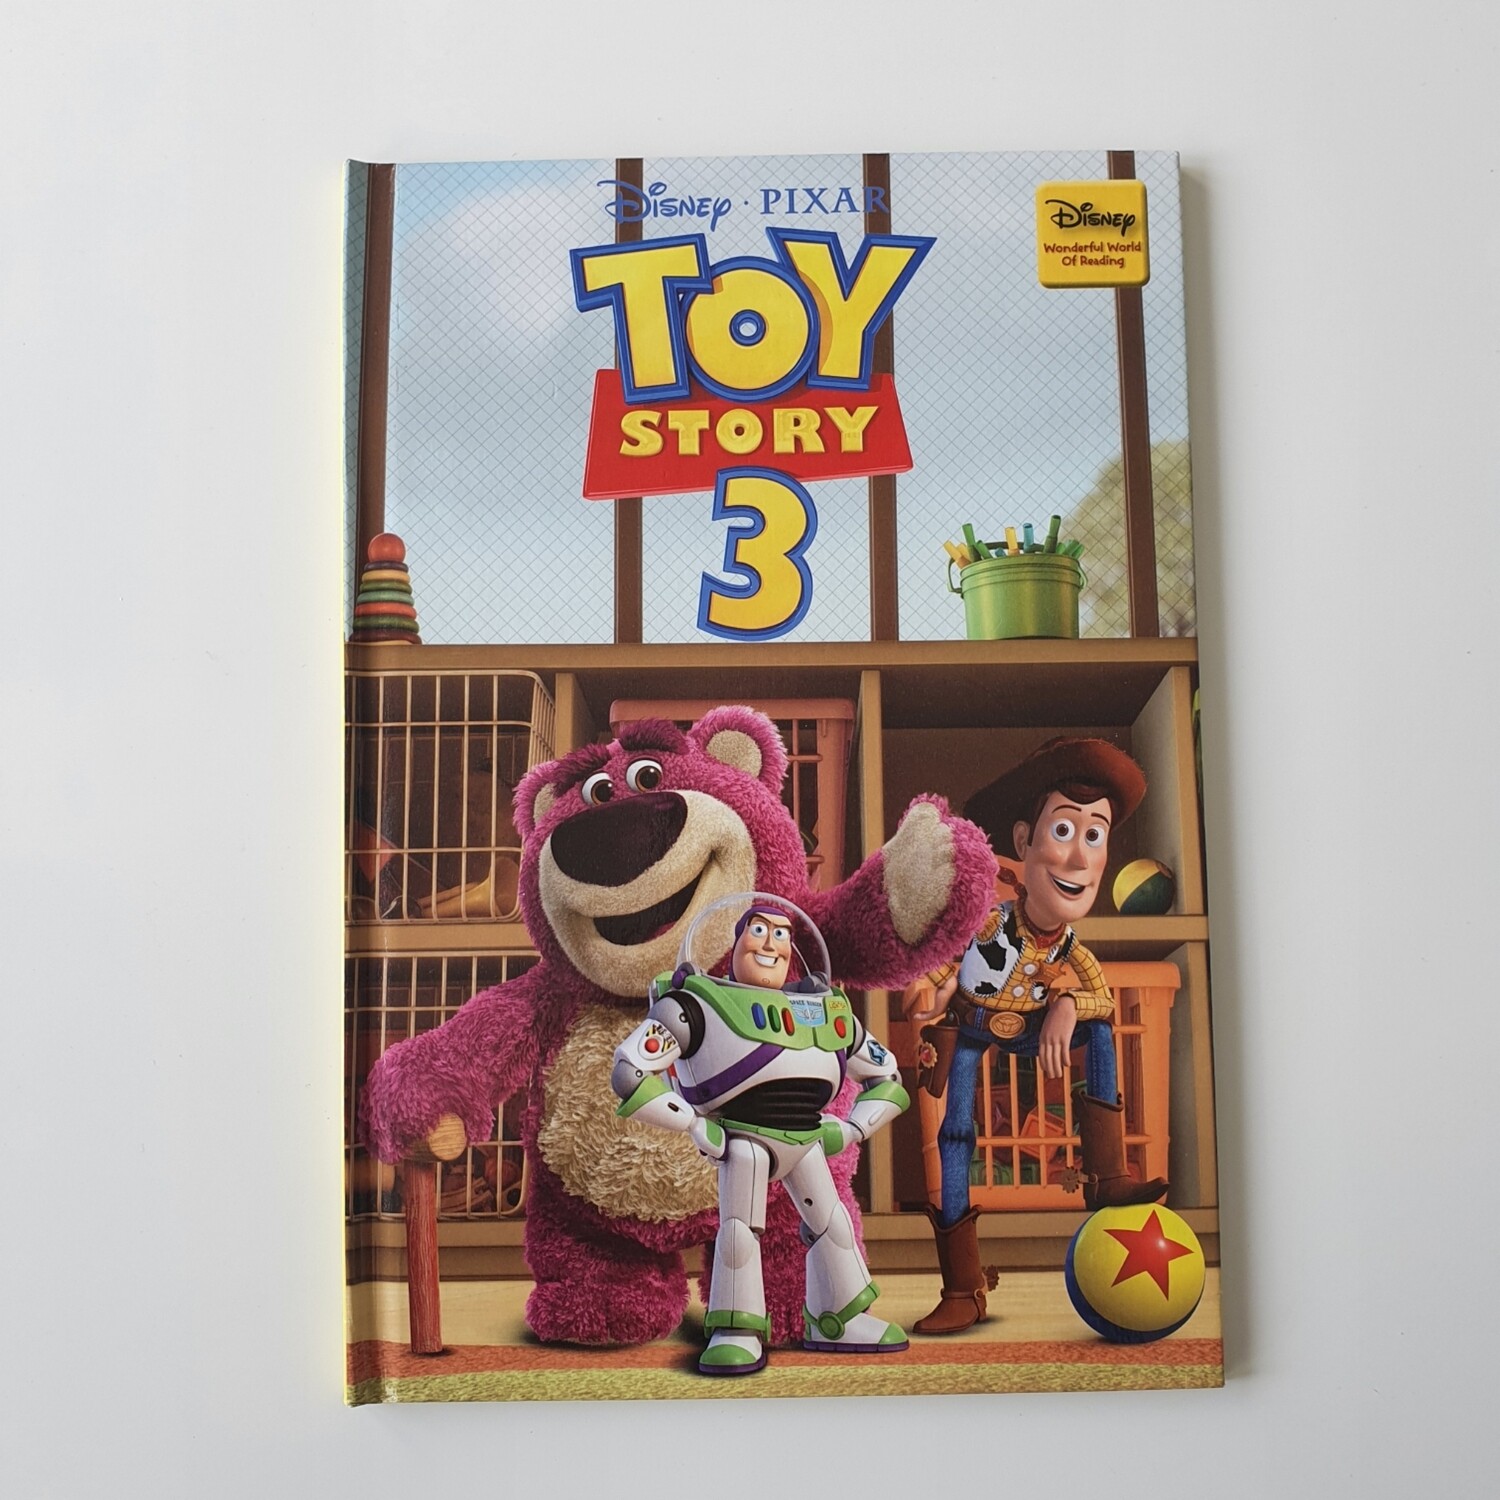 Toy Story 3 Notebook